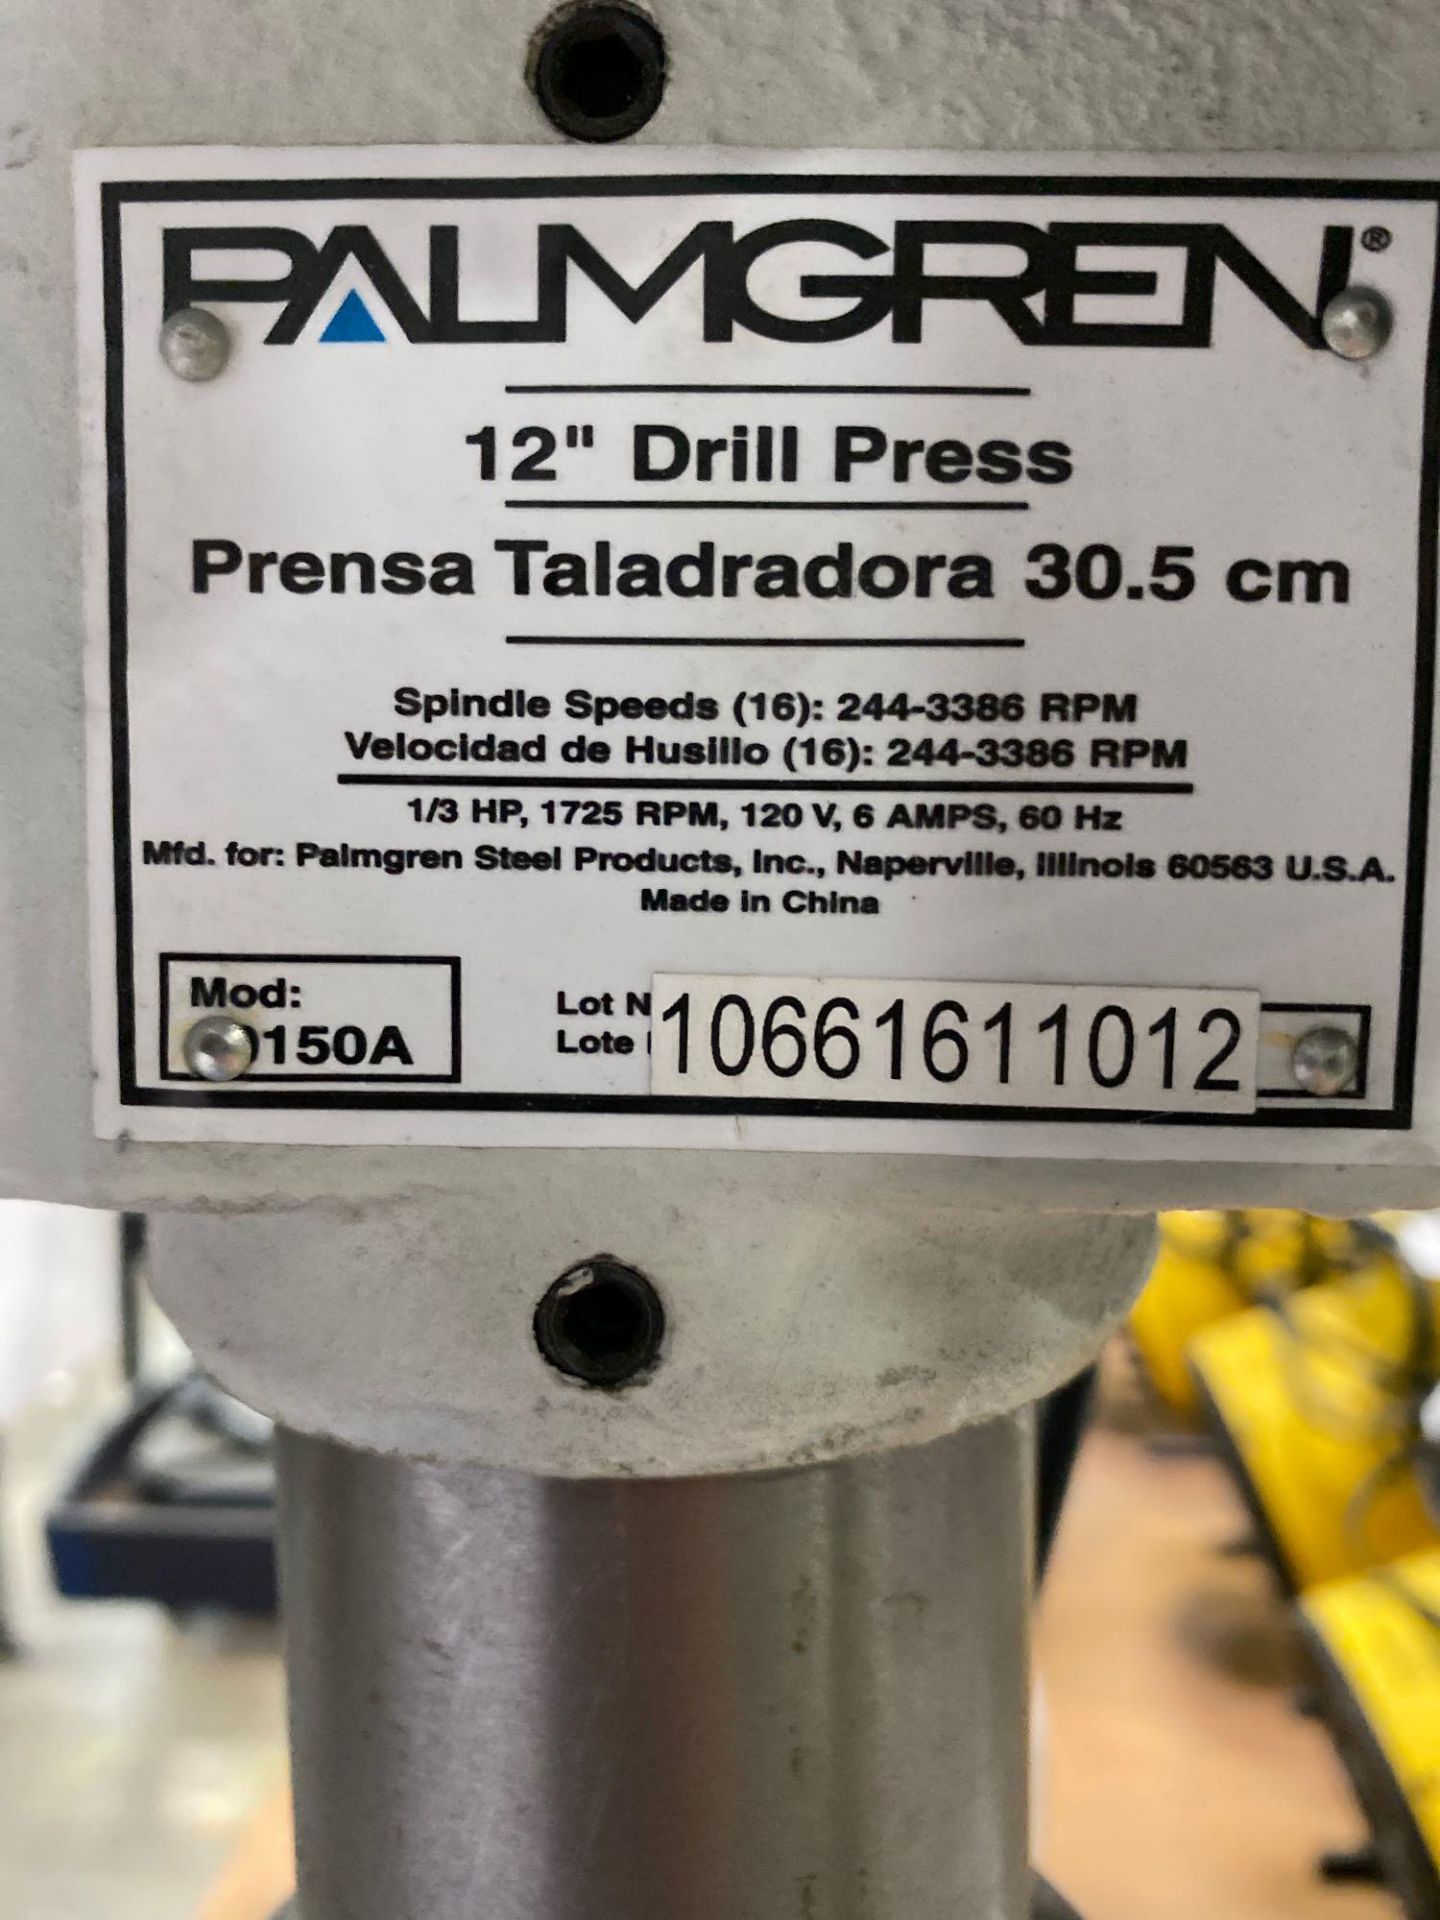 Palmgreen 12” Drill Press - Image 4 of 4